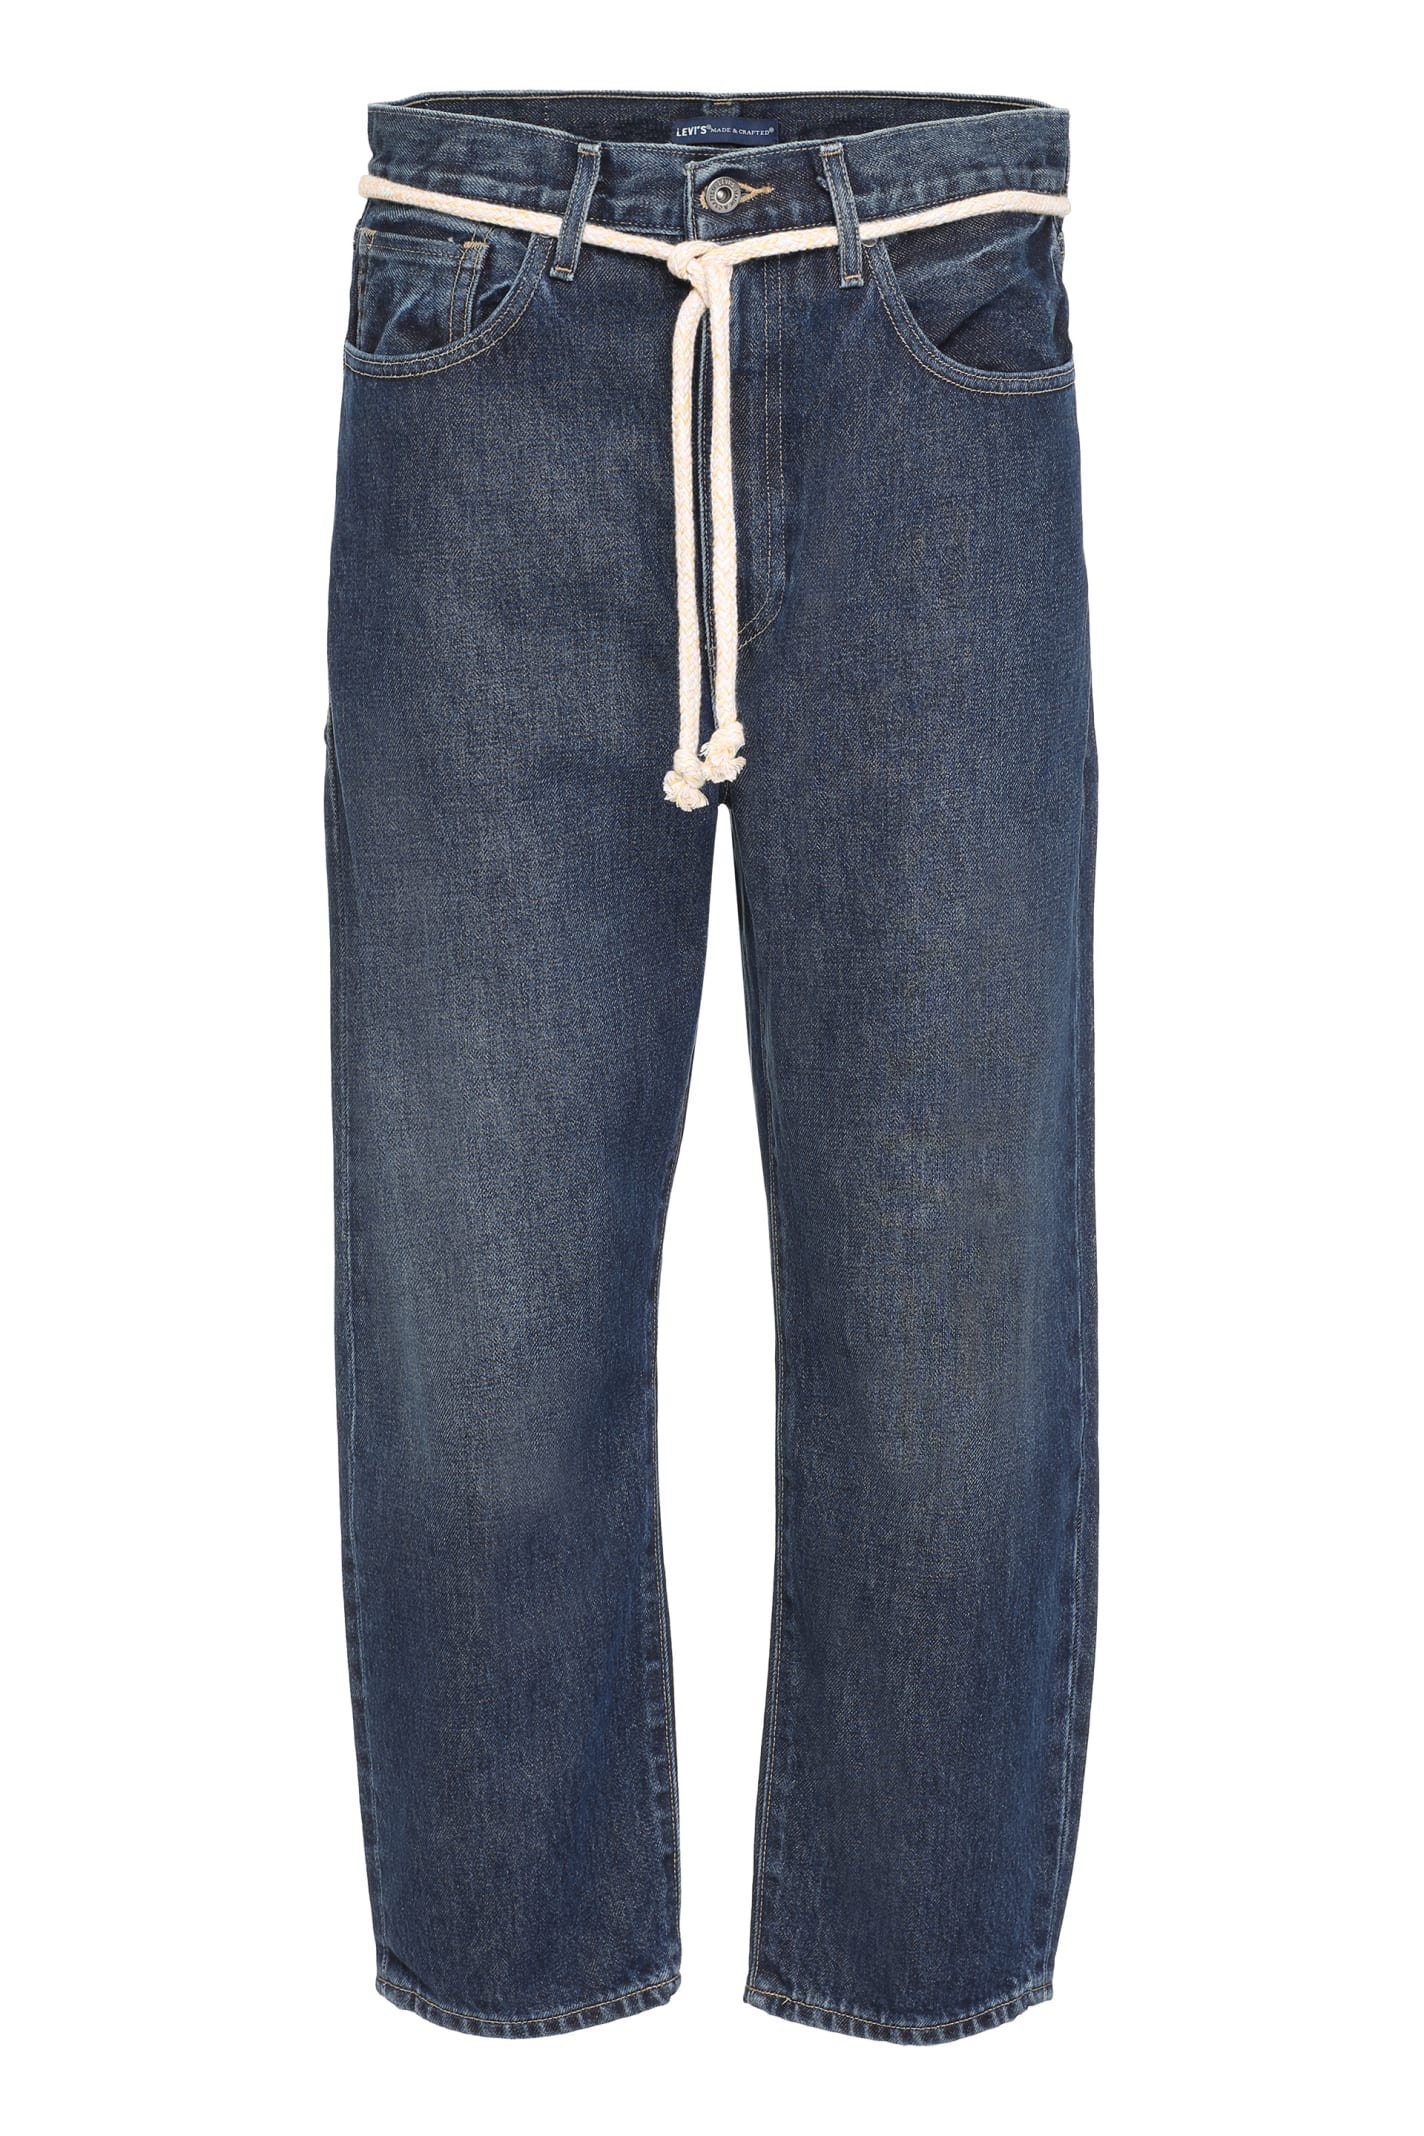 Levi's Barrel Crop Jeans